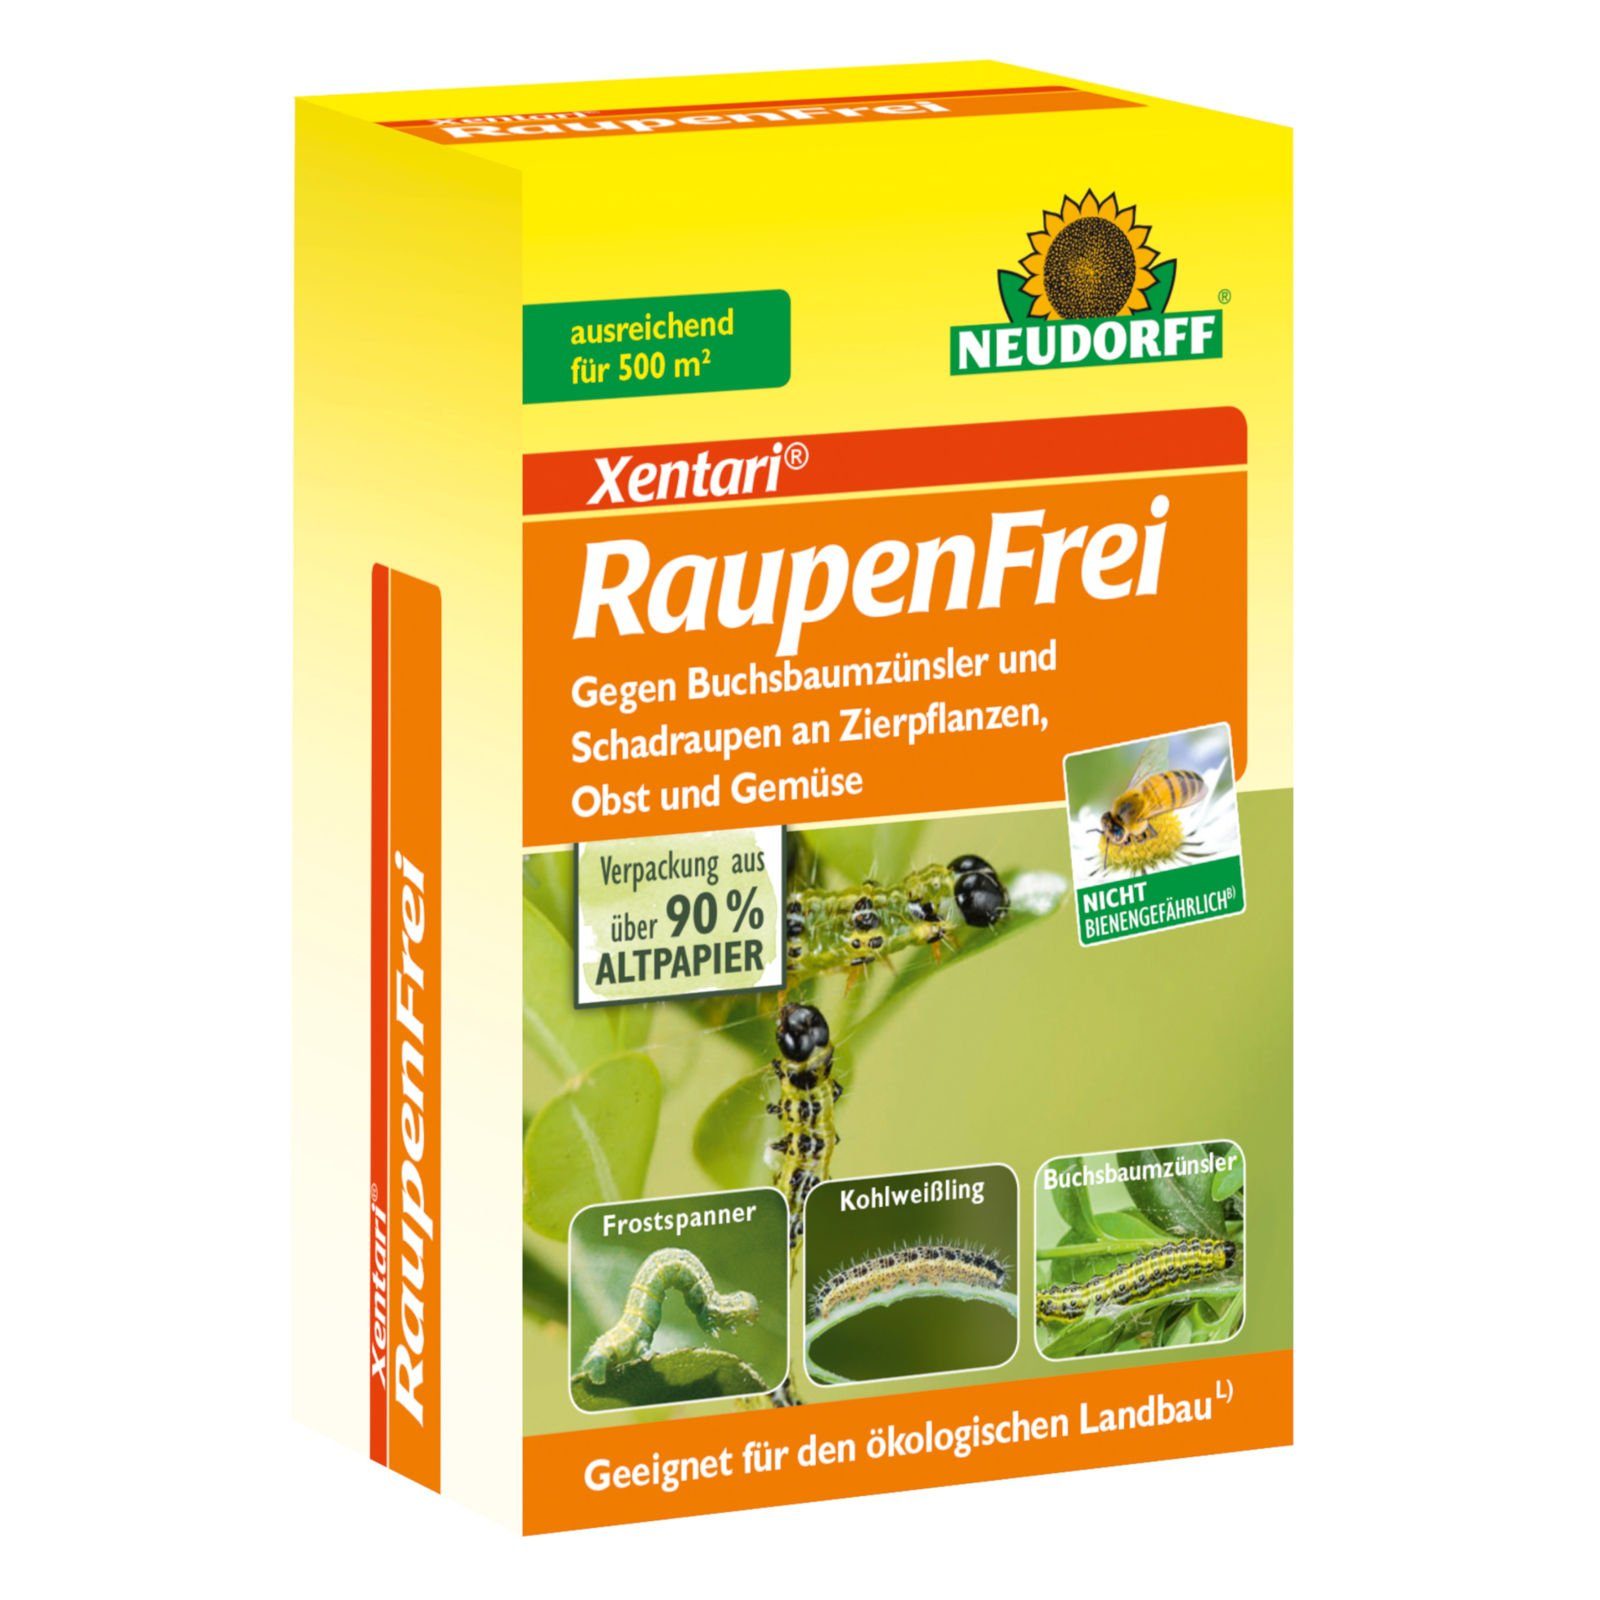 Neudorff Insektenvernichtungsmittel 2x XenTari - g 25 Raupenfrei